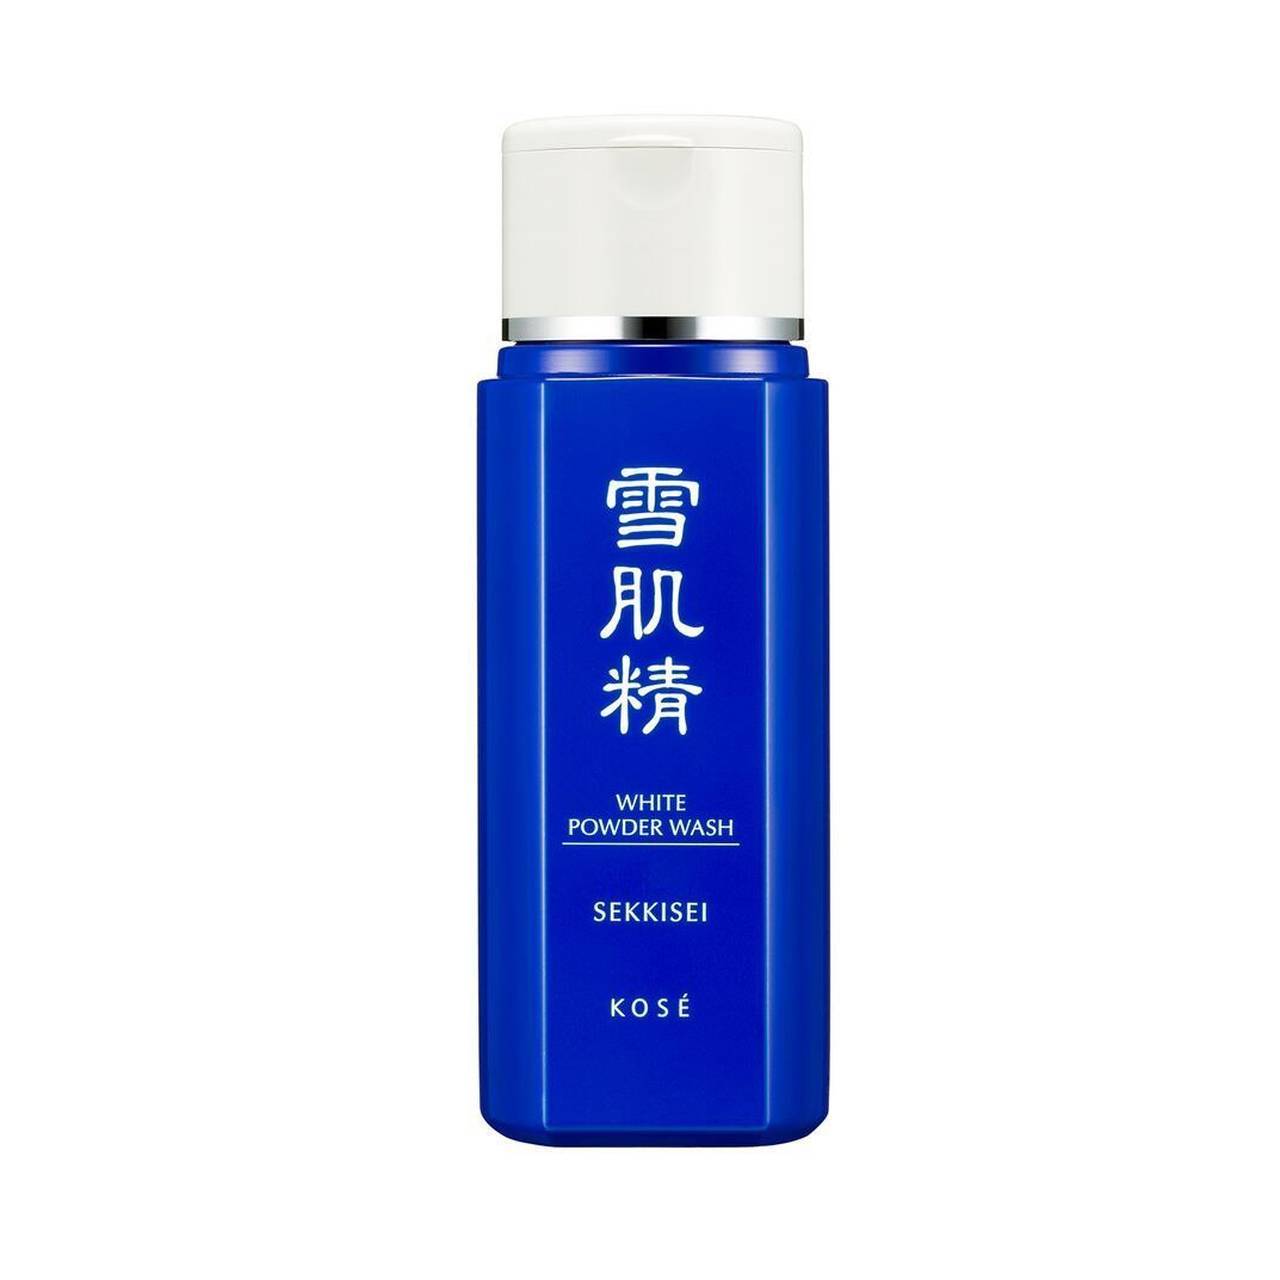 Kose Sekkisei Facial Powder Wash (100g) - Best Buy World Singapore